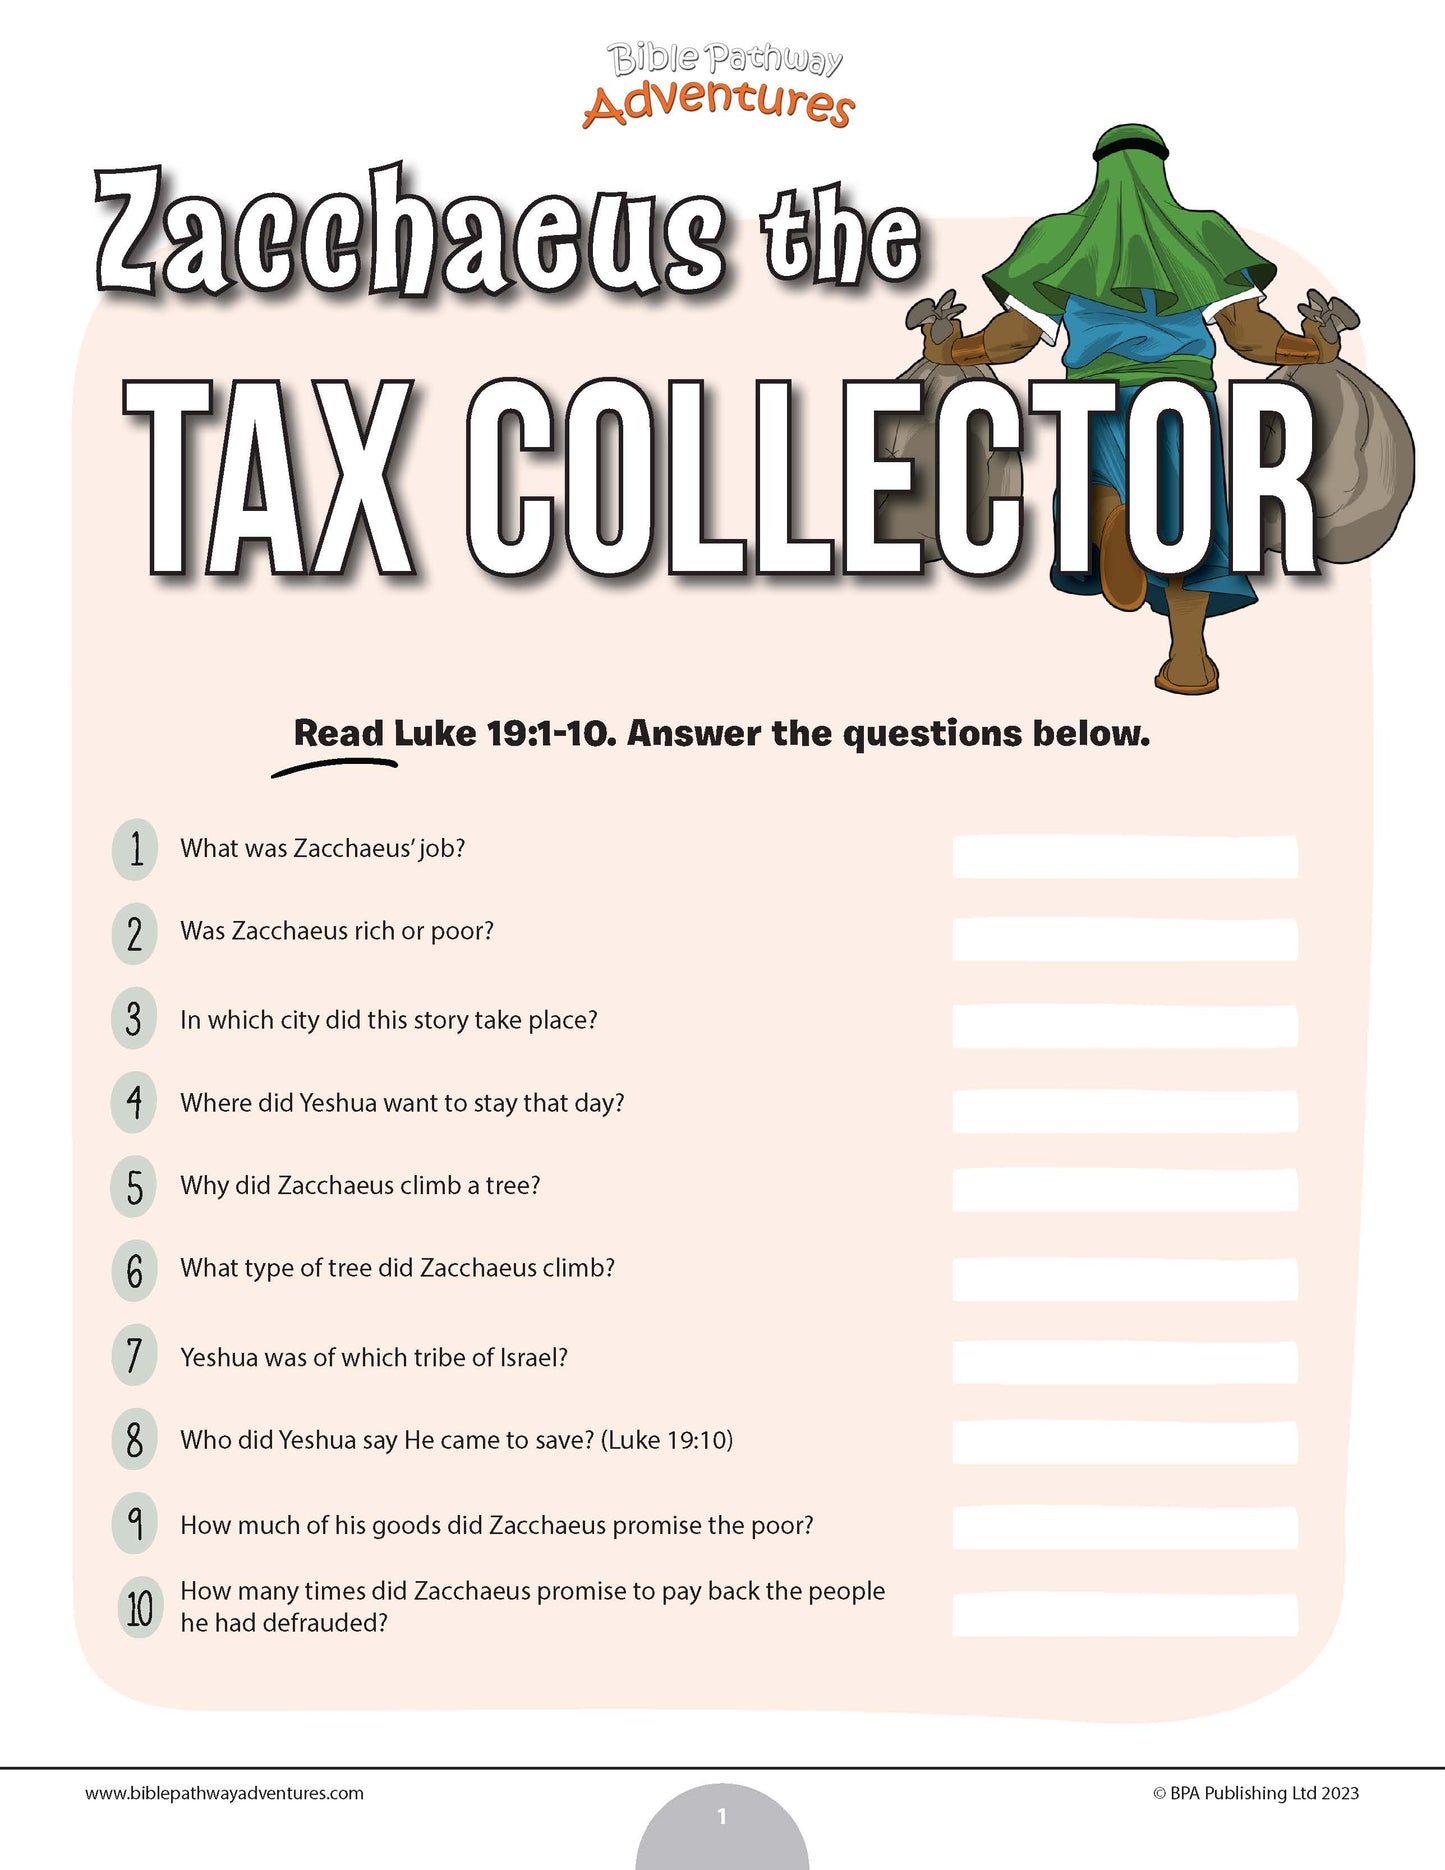 Zacchaeus the Tax Collector quiz (PDF)